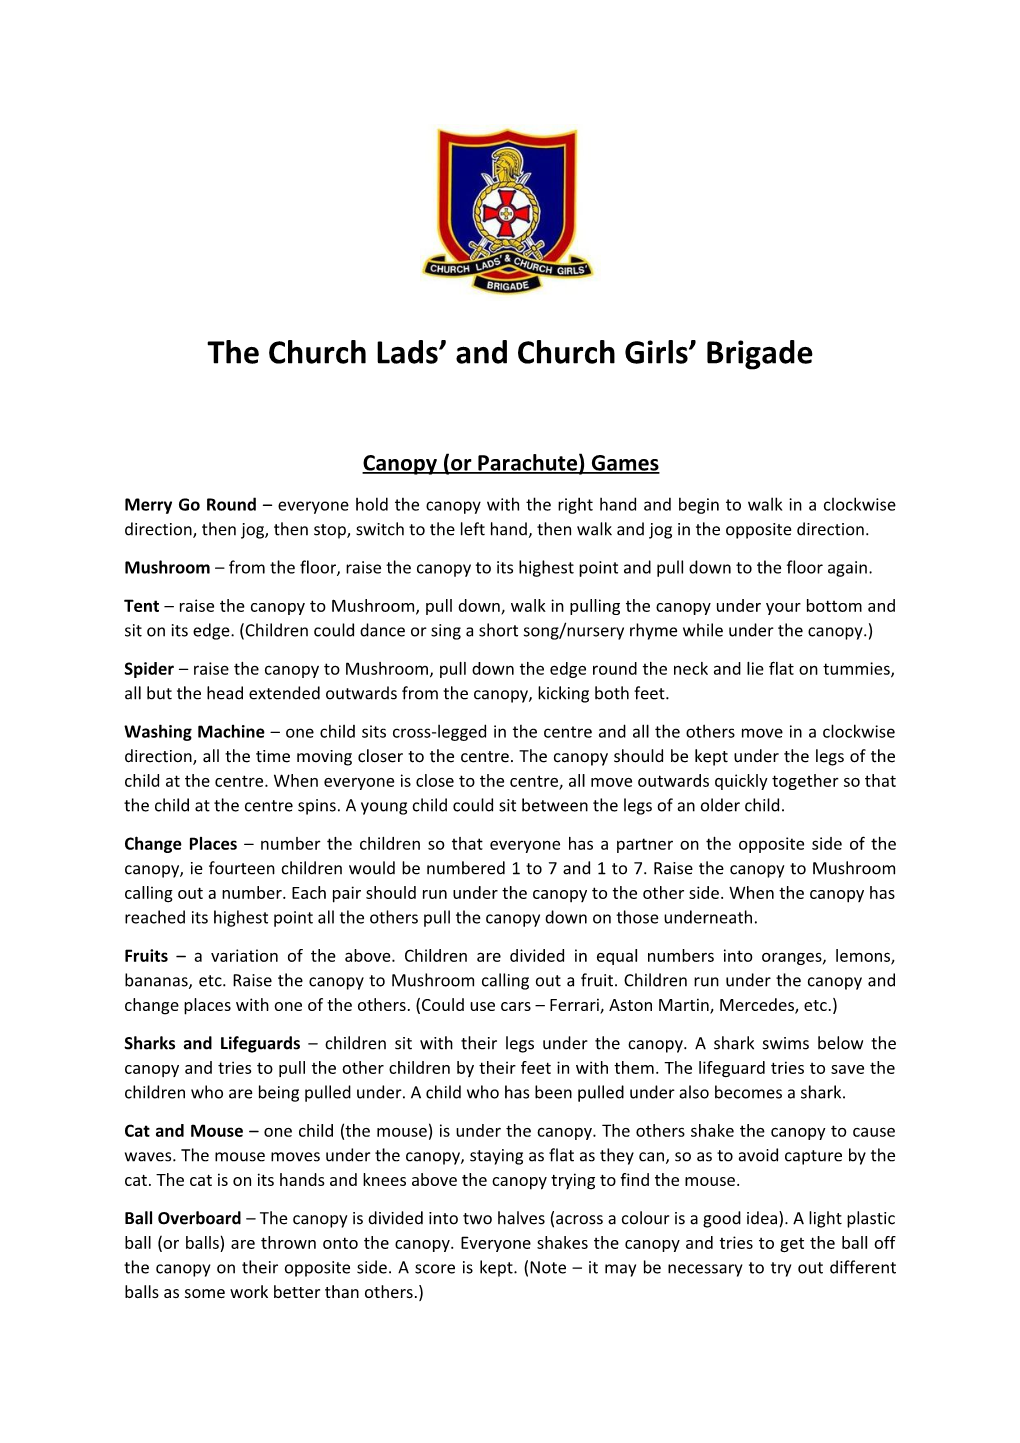 The Church Lads and Church Girls Brigade